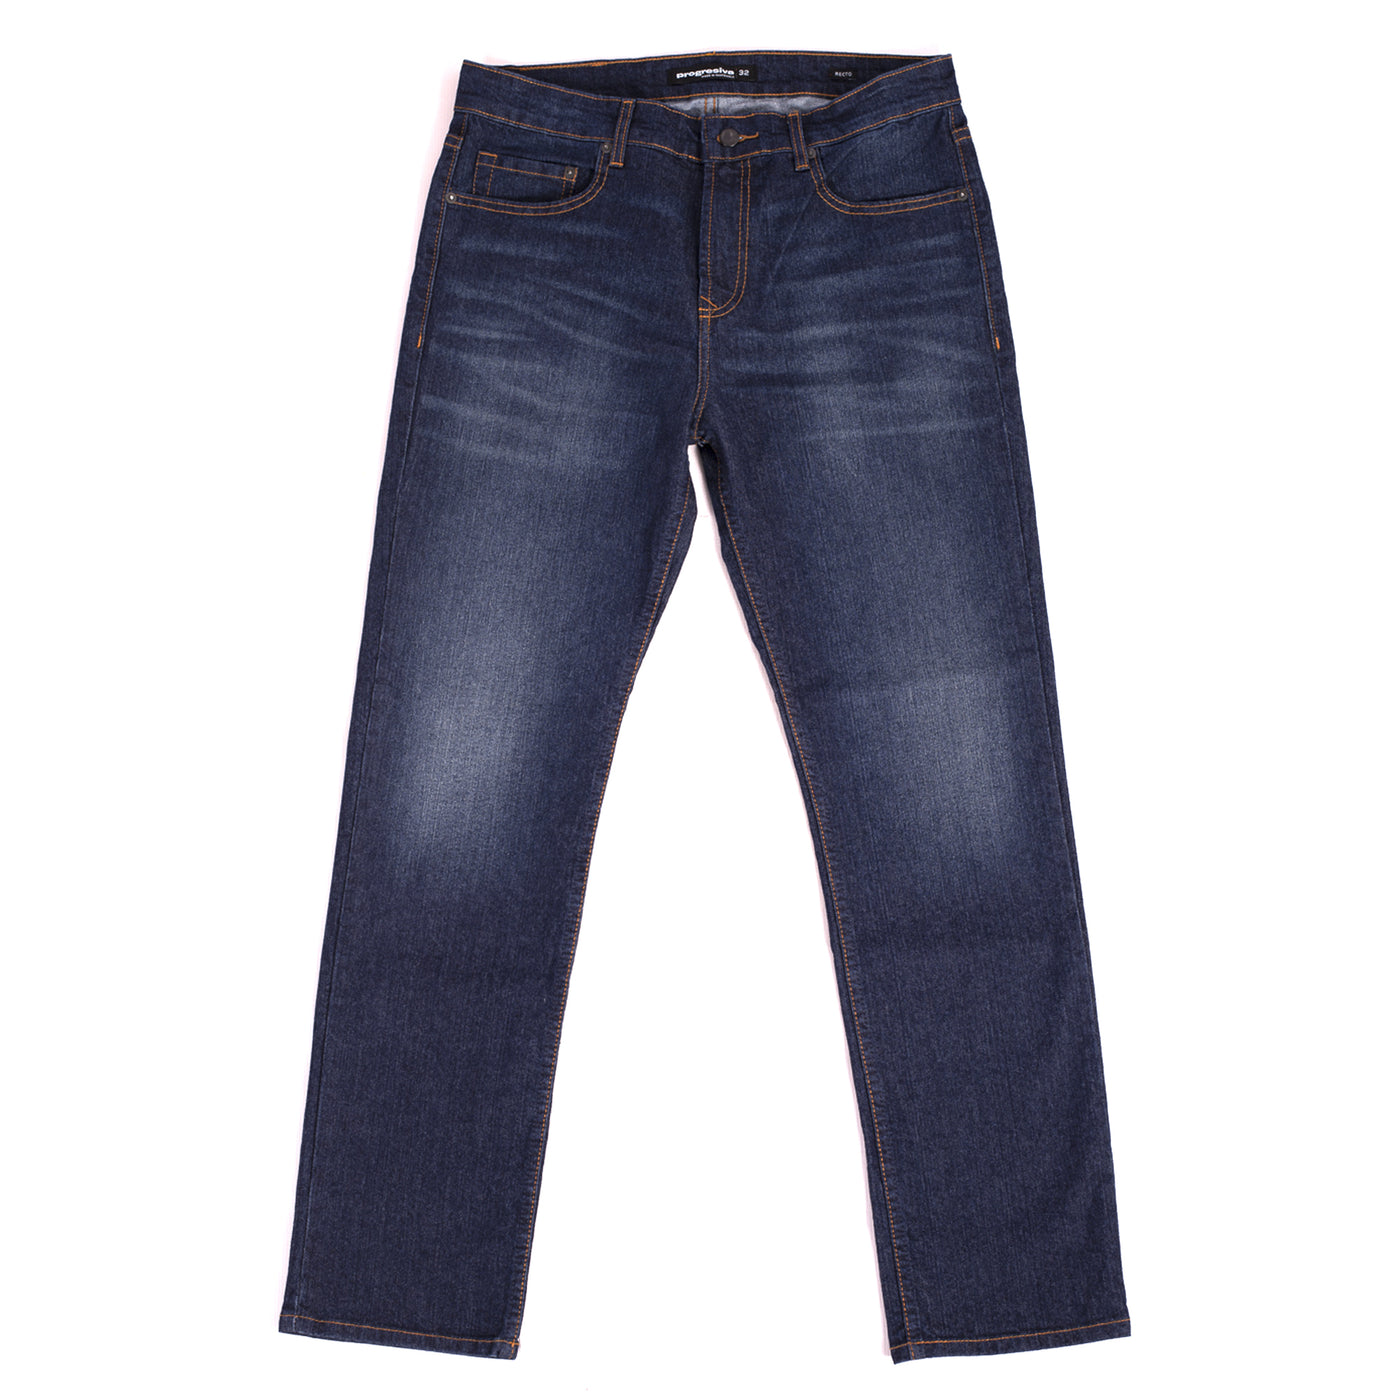 Jeans super denim - ESTOCOLMO - recto